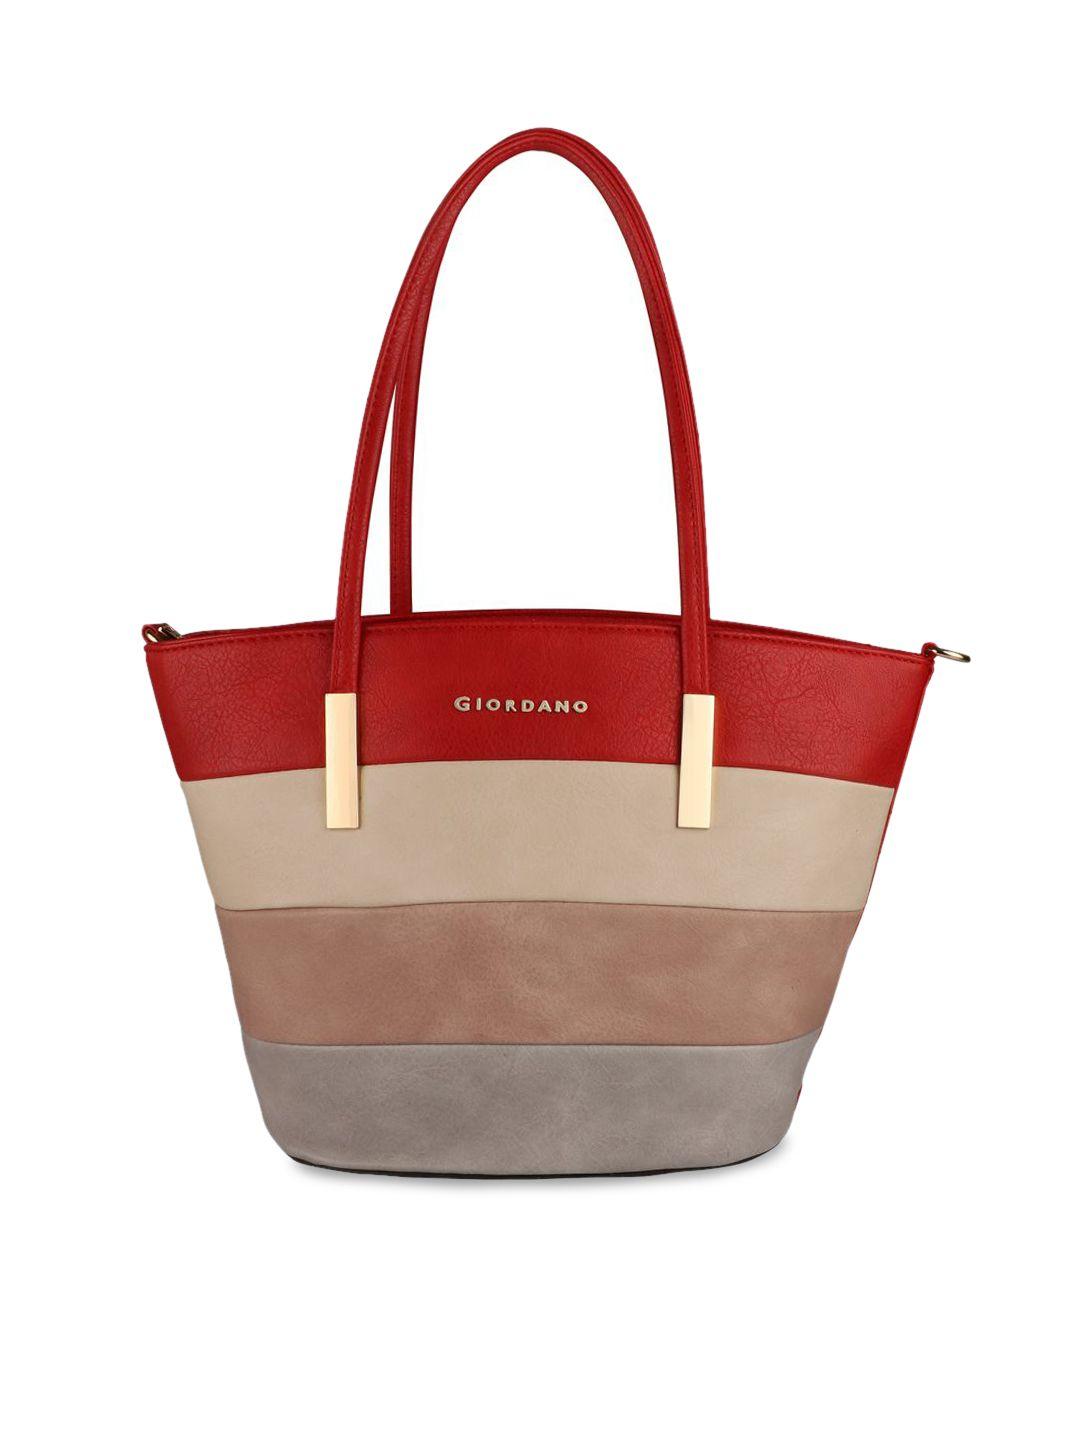 giordano red & beige colourblocked shoulder bag